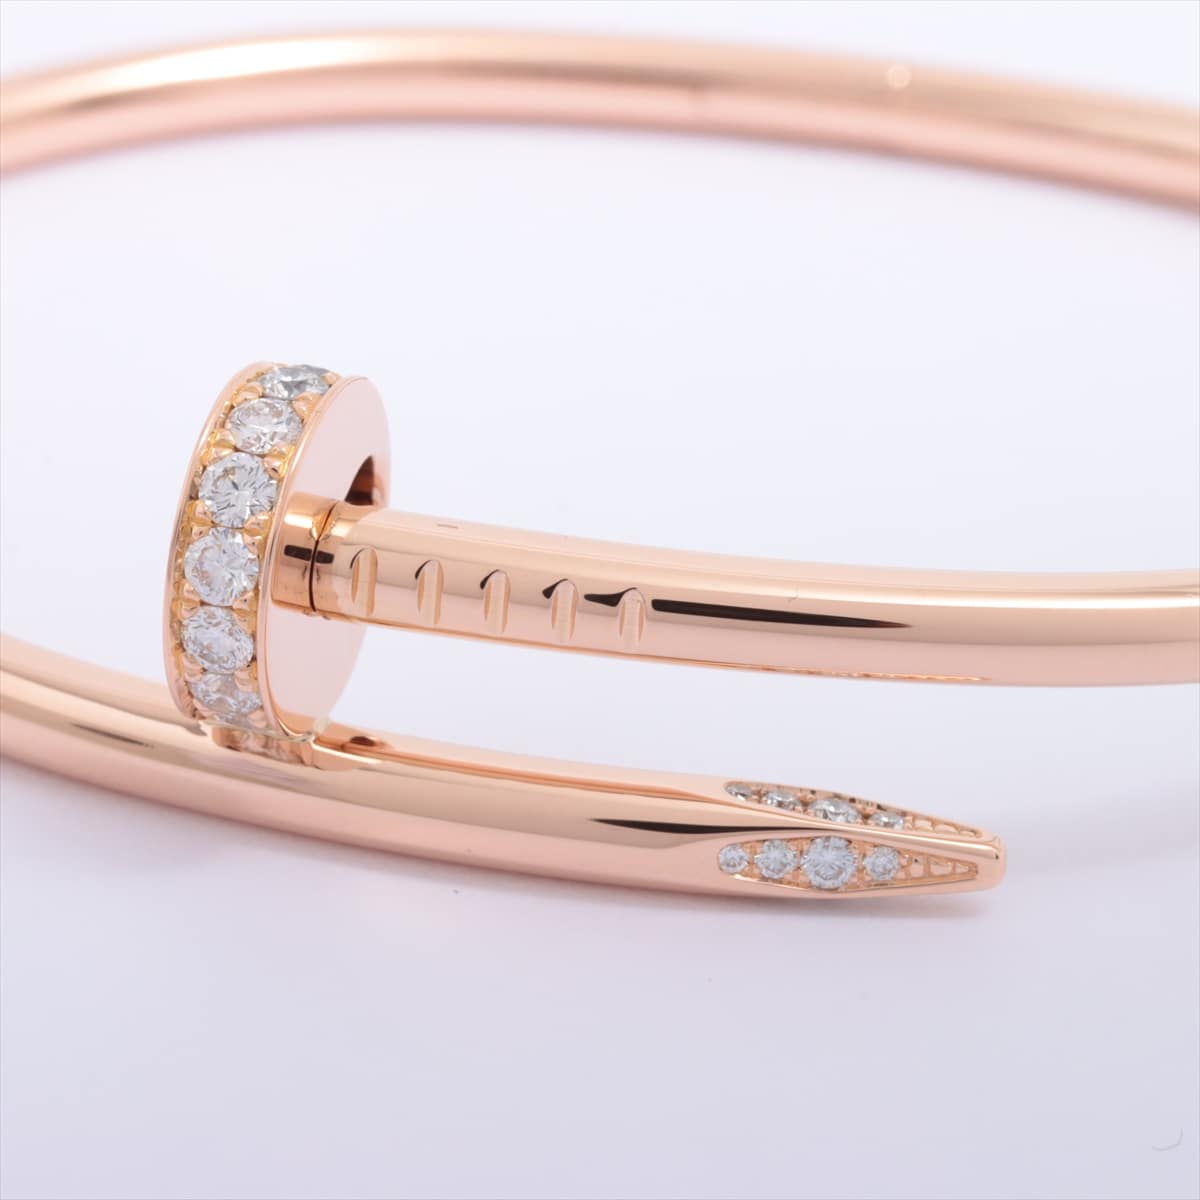 Cartier Juste un Clou diamond Bracelet 750 PG 32.8g 18